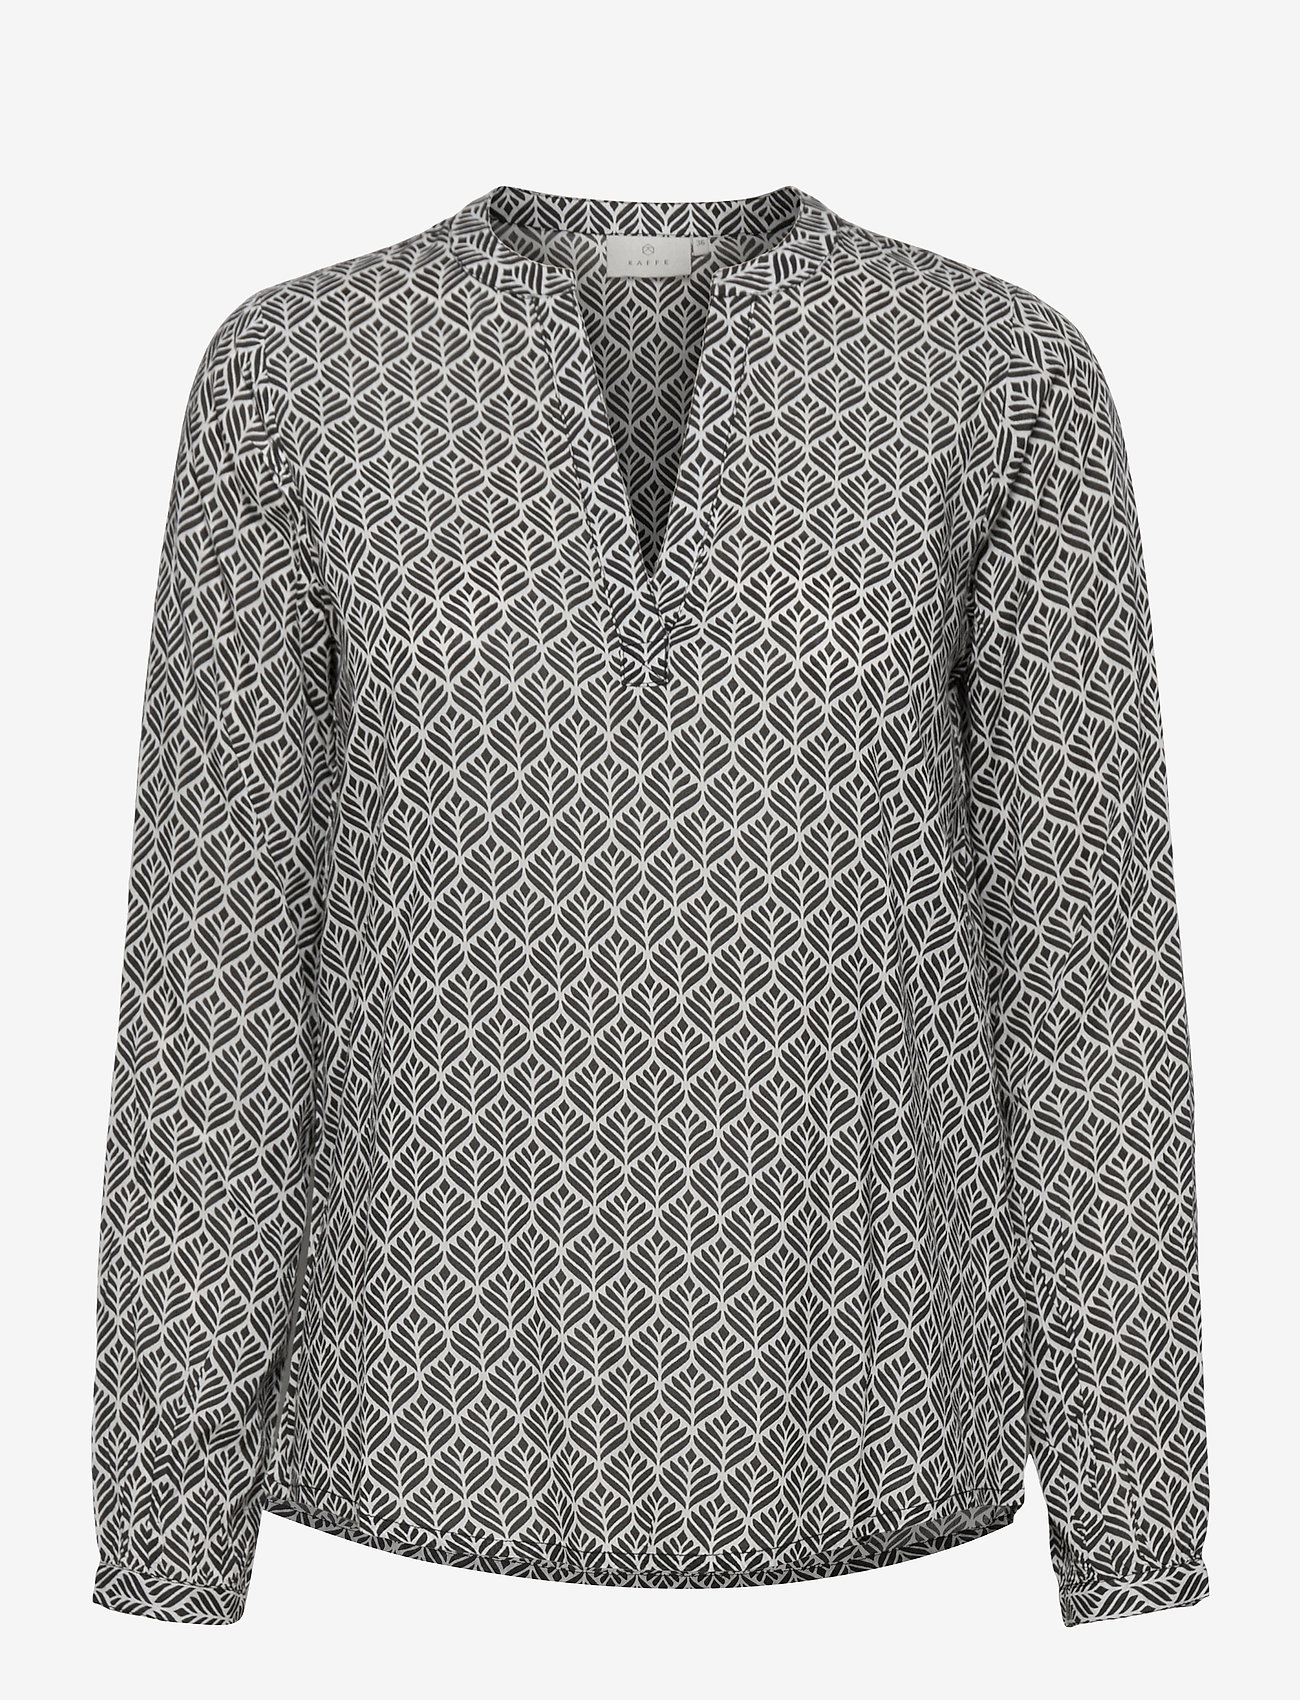 Kaffe - KAfana Tilly Blouse - long-sleeved blouses - black / chalk fan print - 0